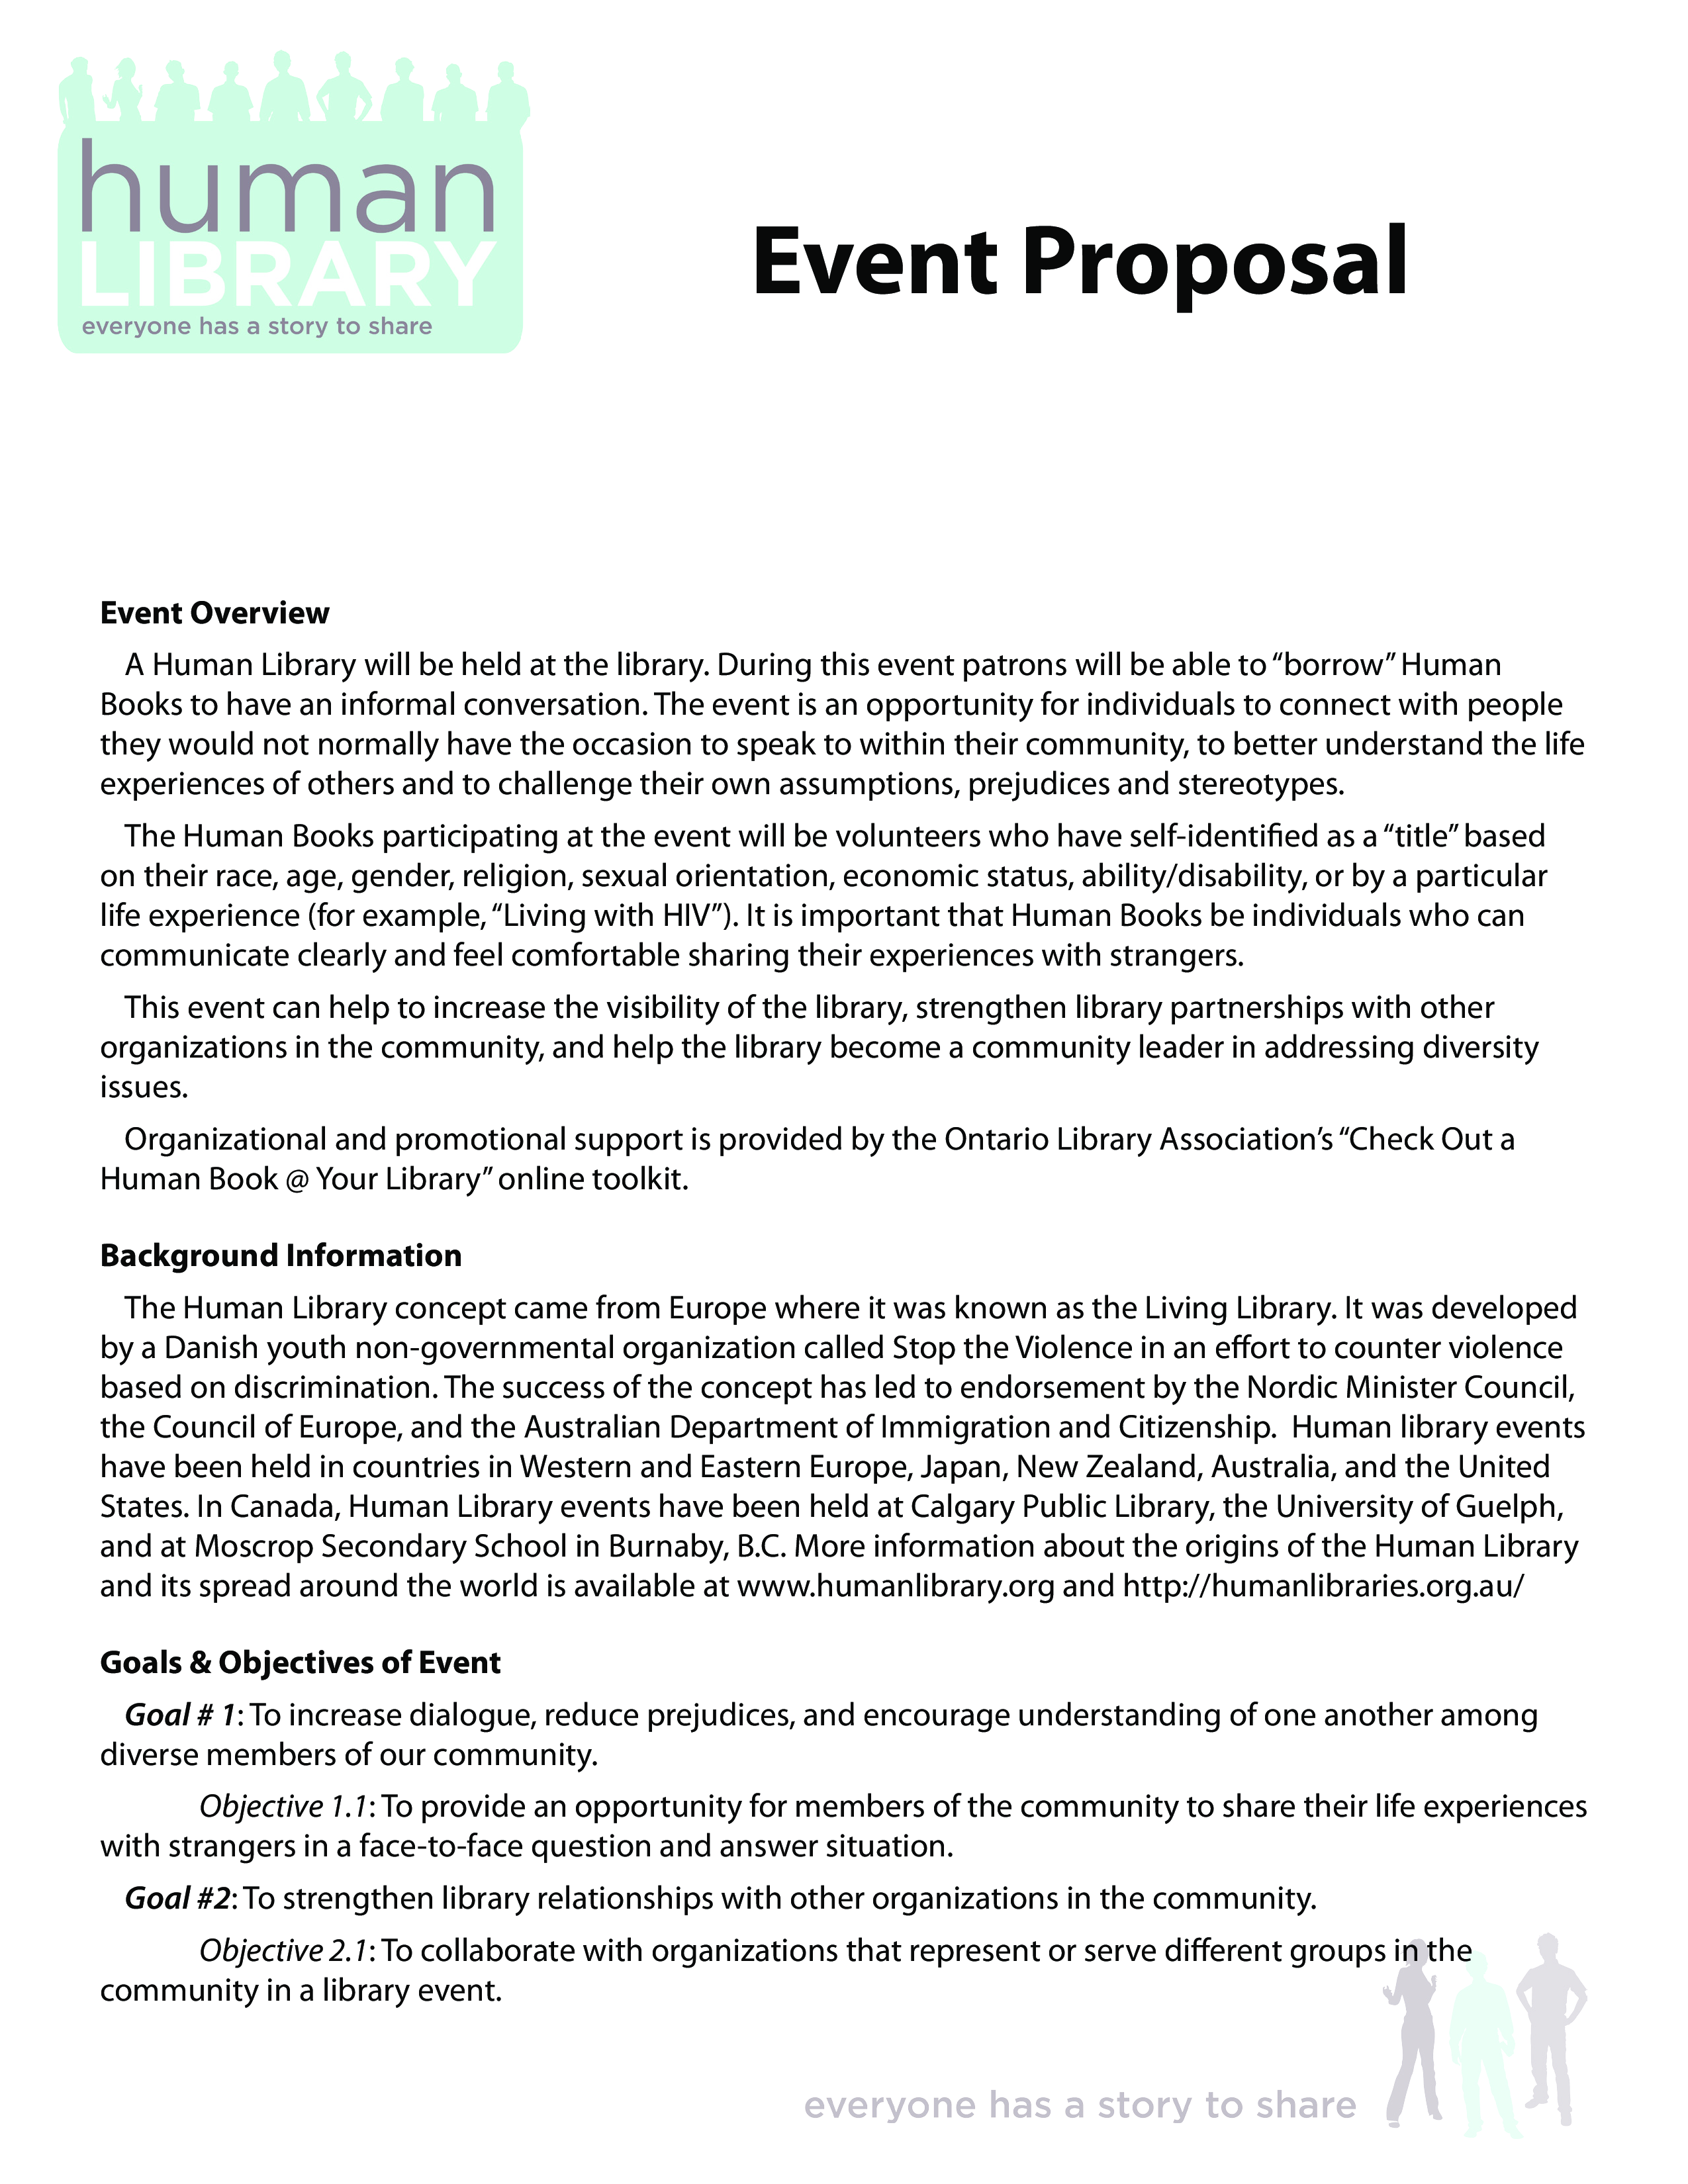 Event Sponsorship Proposal template main image